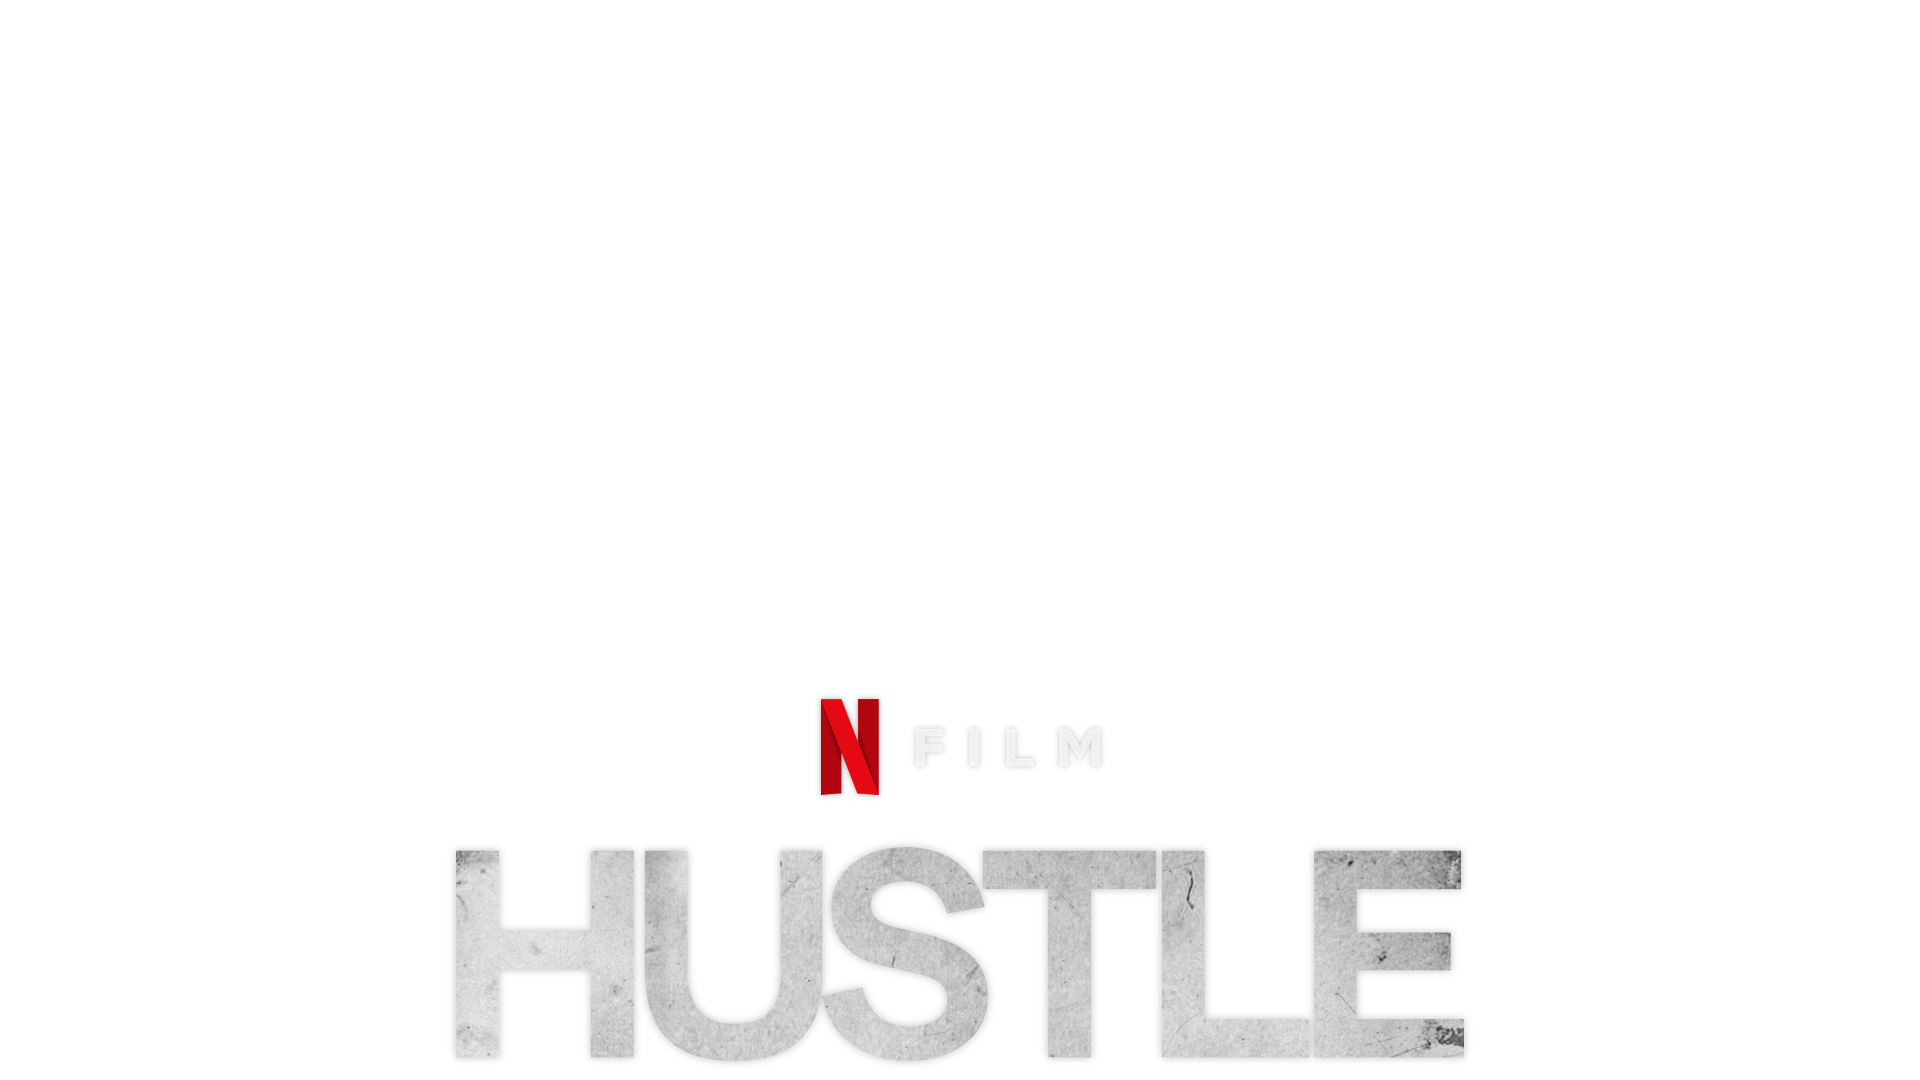 Adam Sandler's Hustle Cast Guide - Netflix Tudum